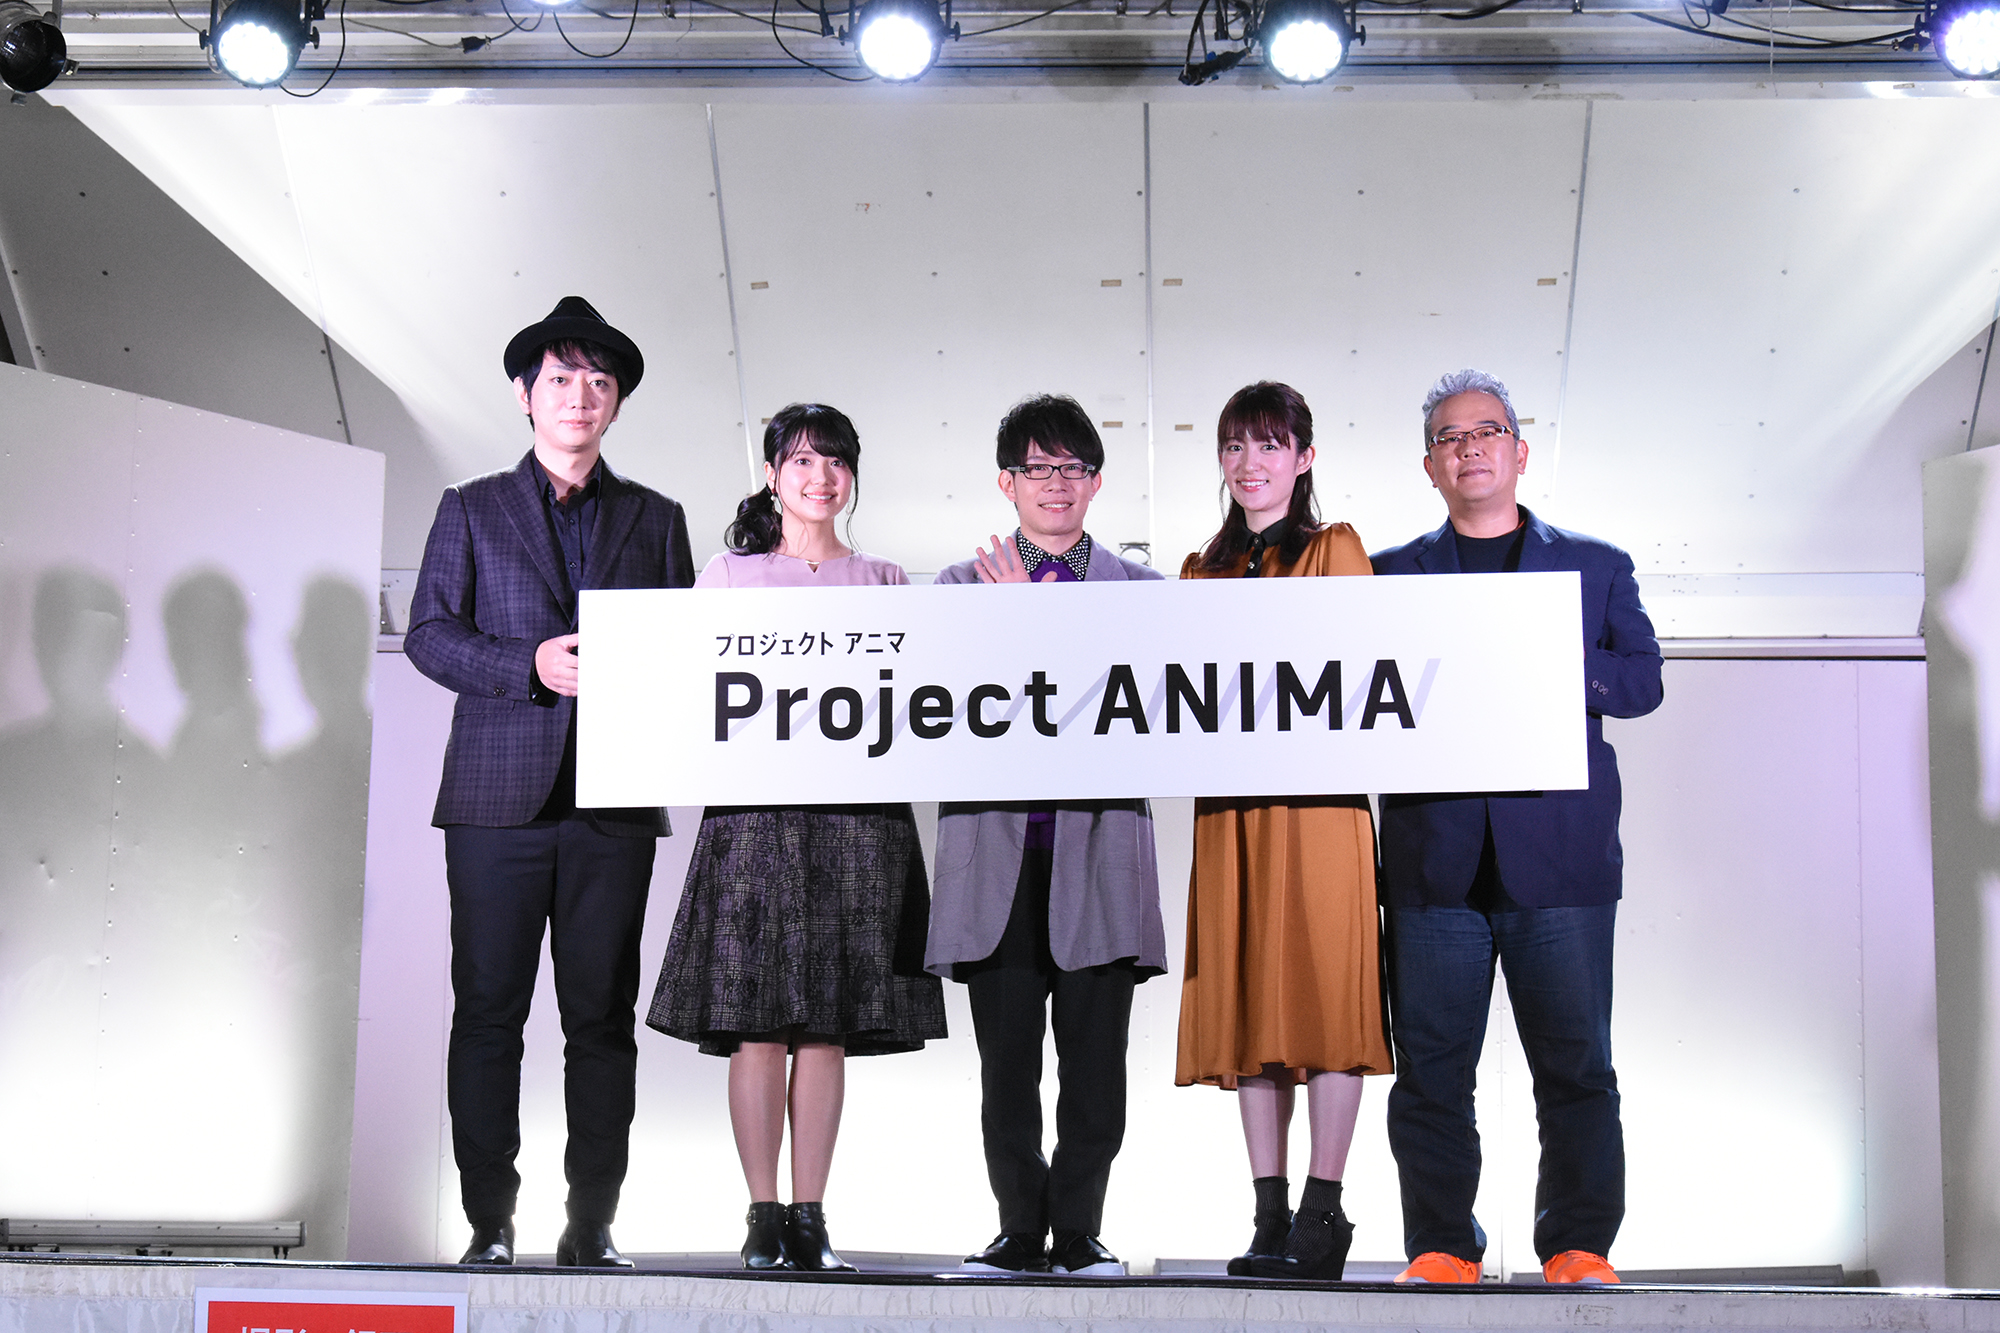 20181115【Event Reports】Project ANIMA 第二弾「異世界・ファンタジー部門」大賞授賞式in浜祭 Report!